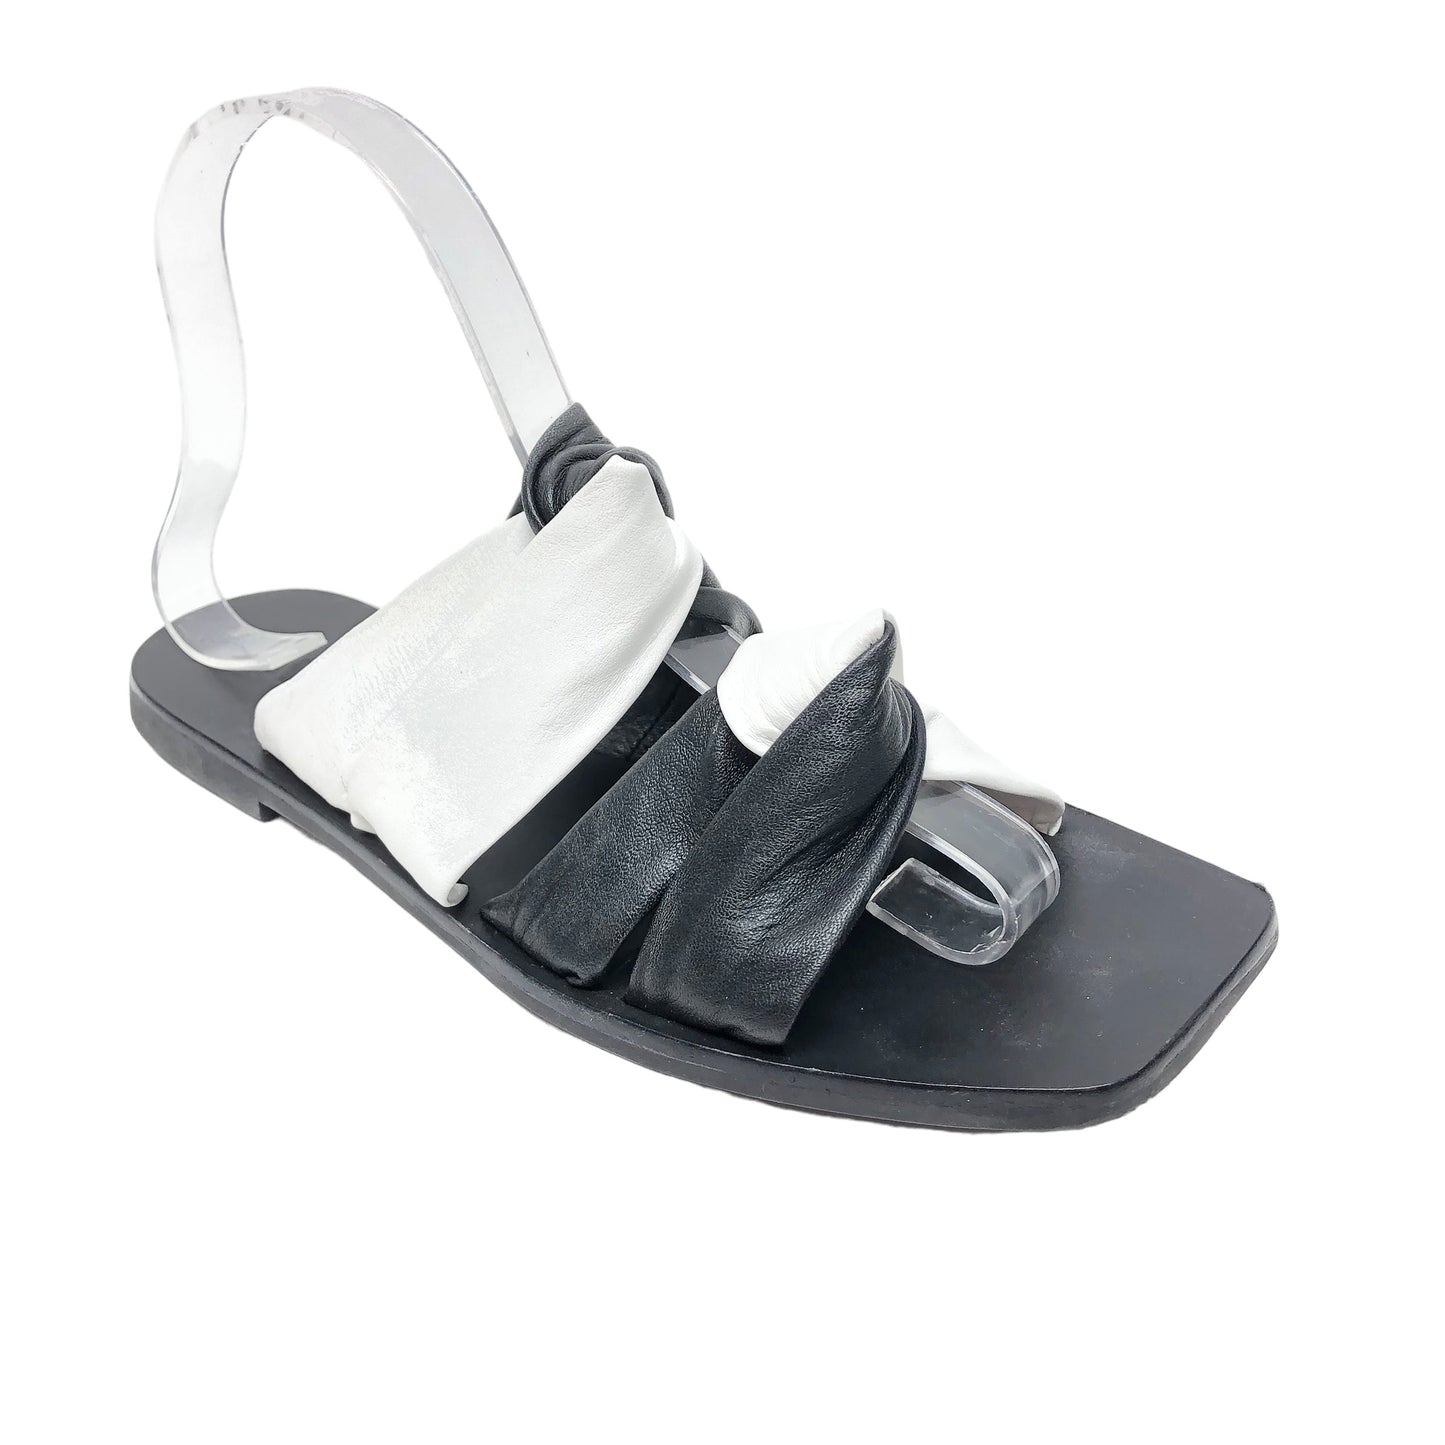 Black & White Sandals Flats Cmb, Size 7.5